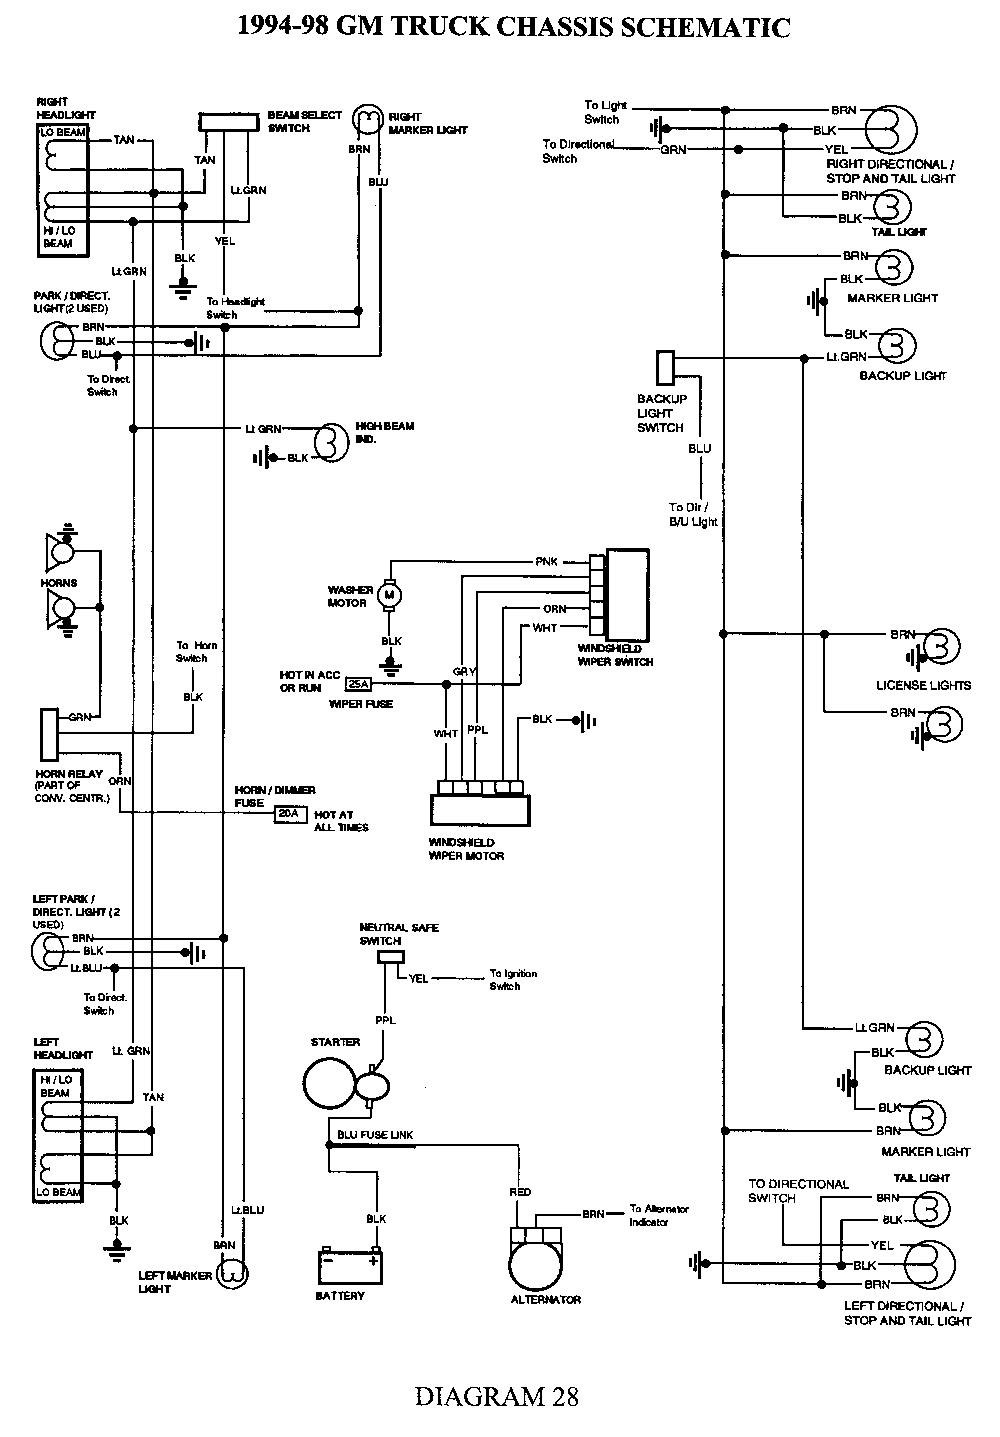 1994 Nitro Wiring Diagram Wiring Diagram Inside 1989 Nitro Wiring Diagram